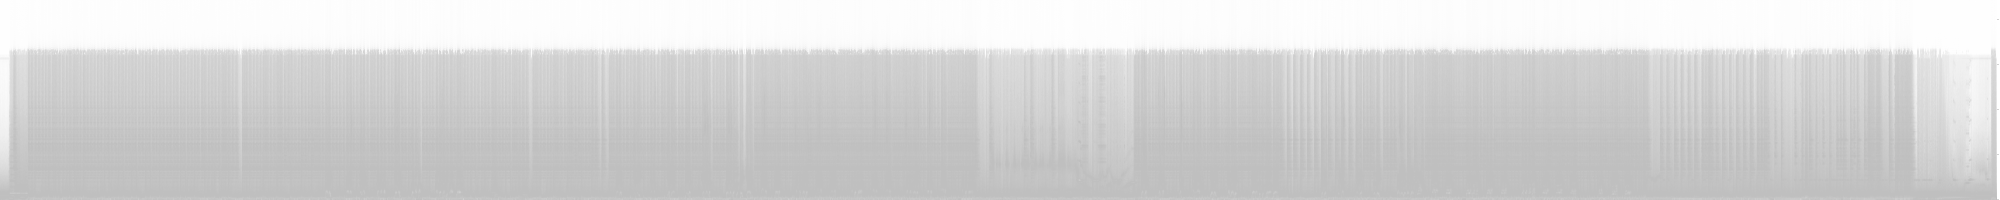 Spectrogram for MerasM - Vietnam Flashbacks [128kpbs]